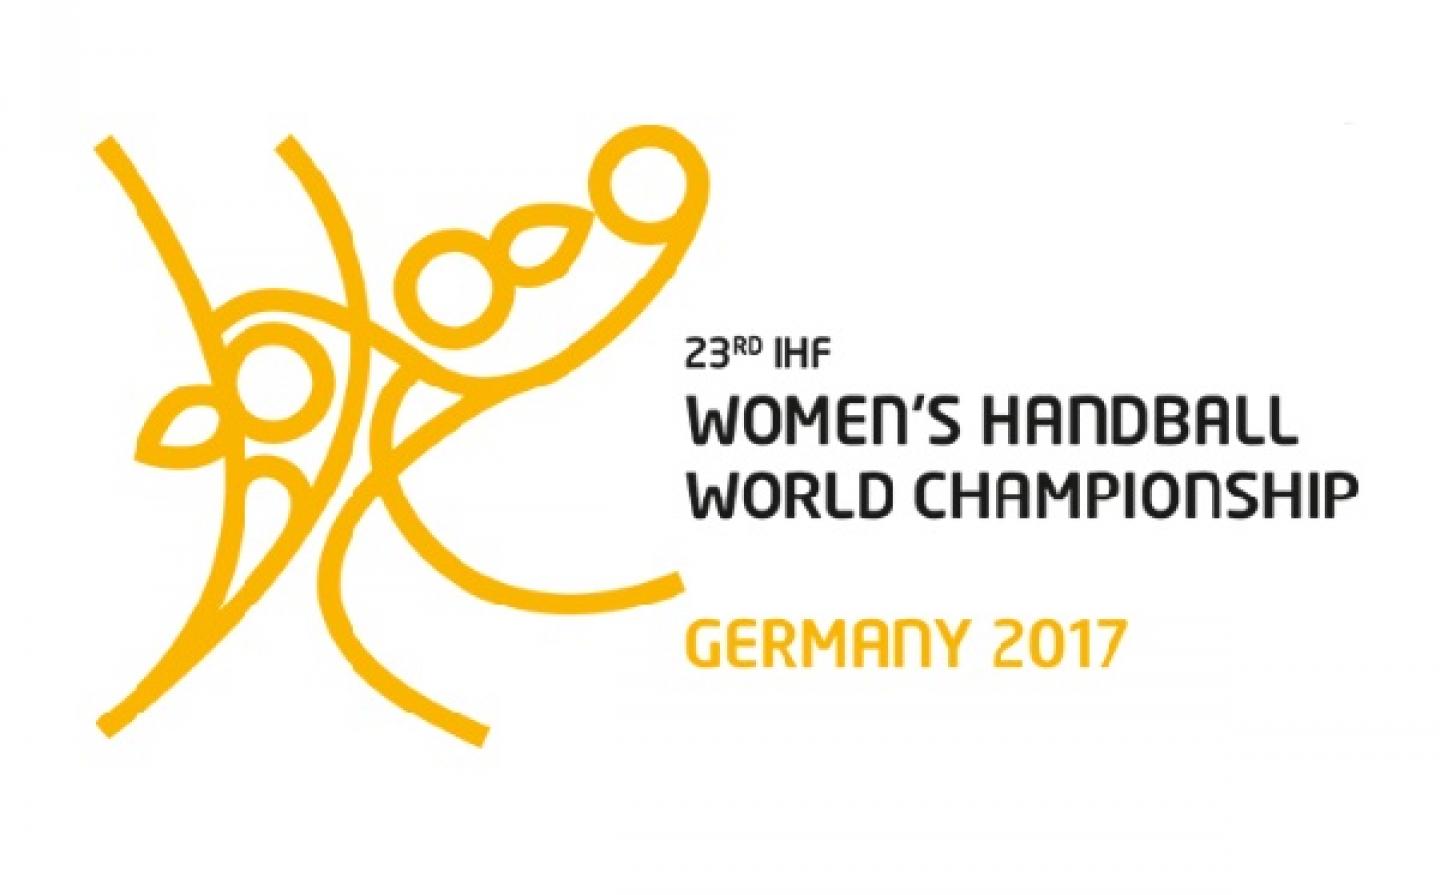 Germany 2017 draw event – Media accreditation